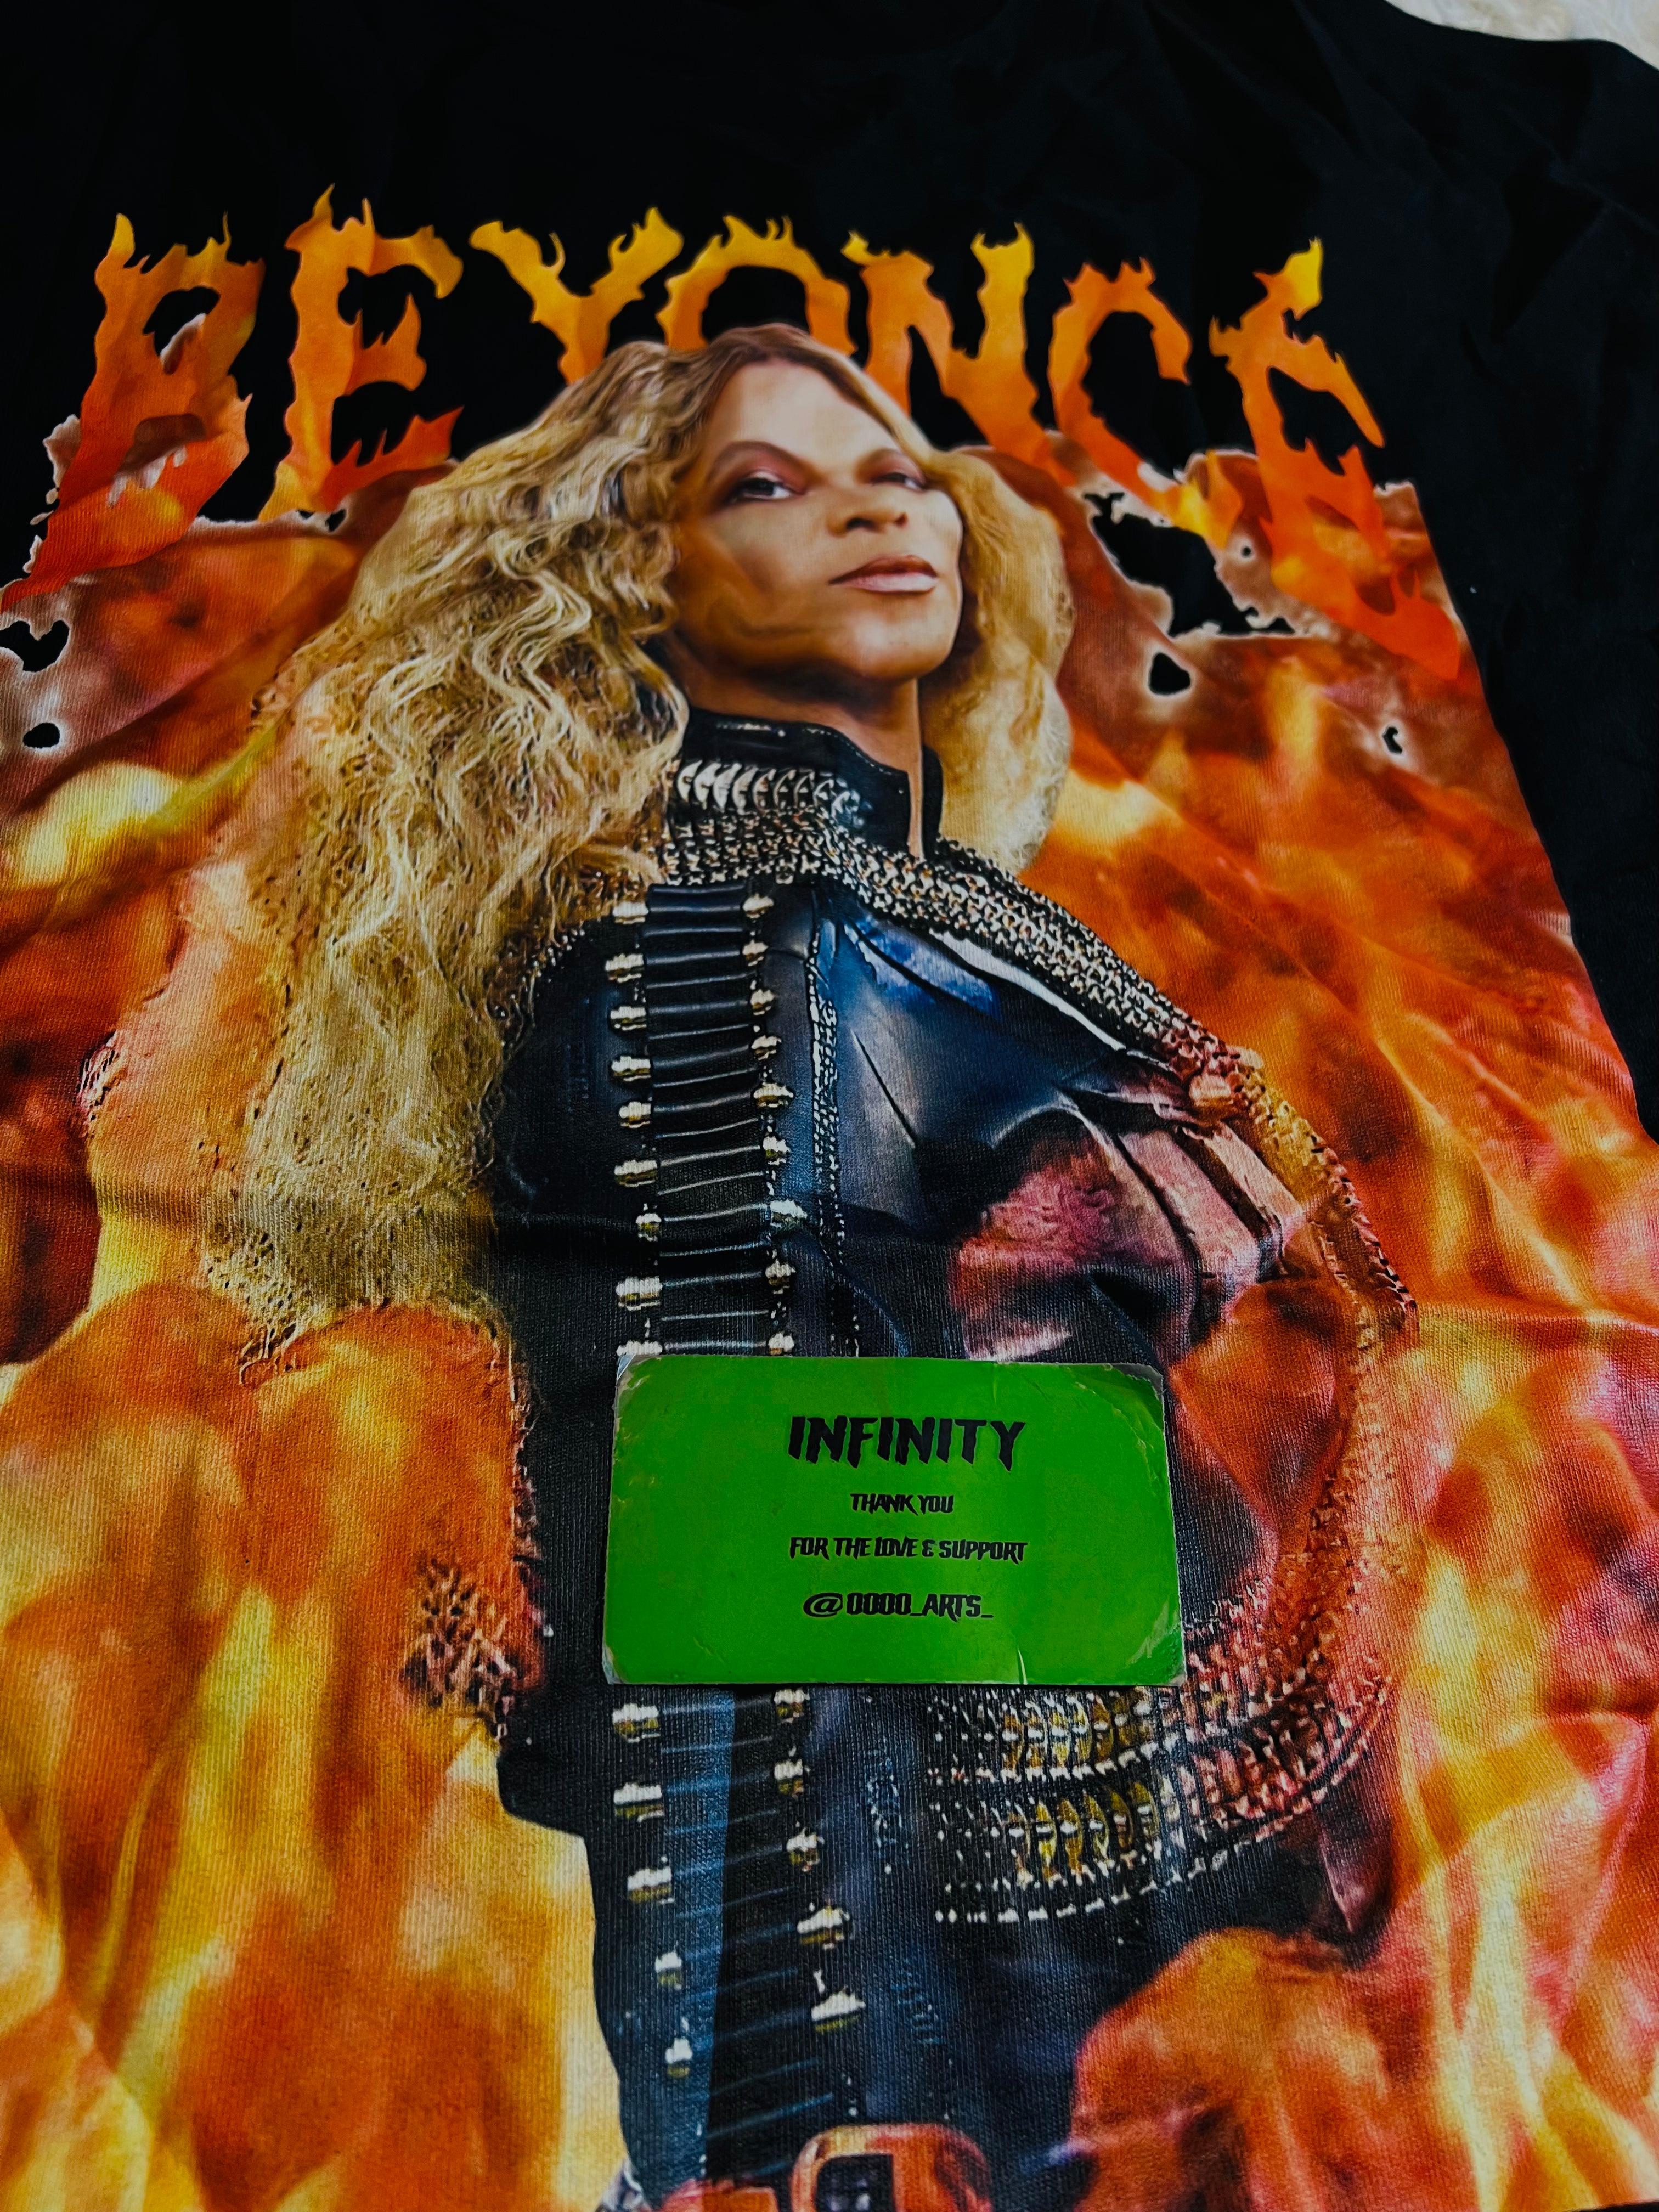 Beyoncé T-shirt